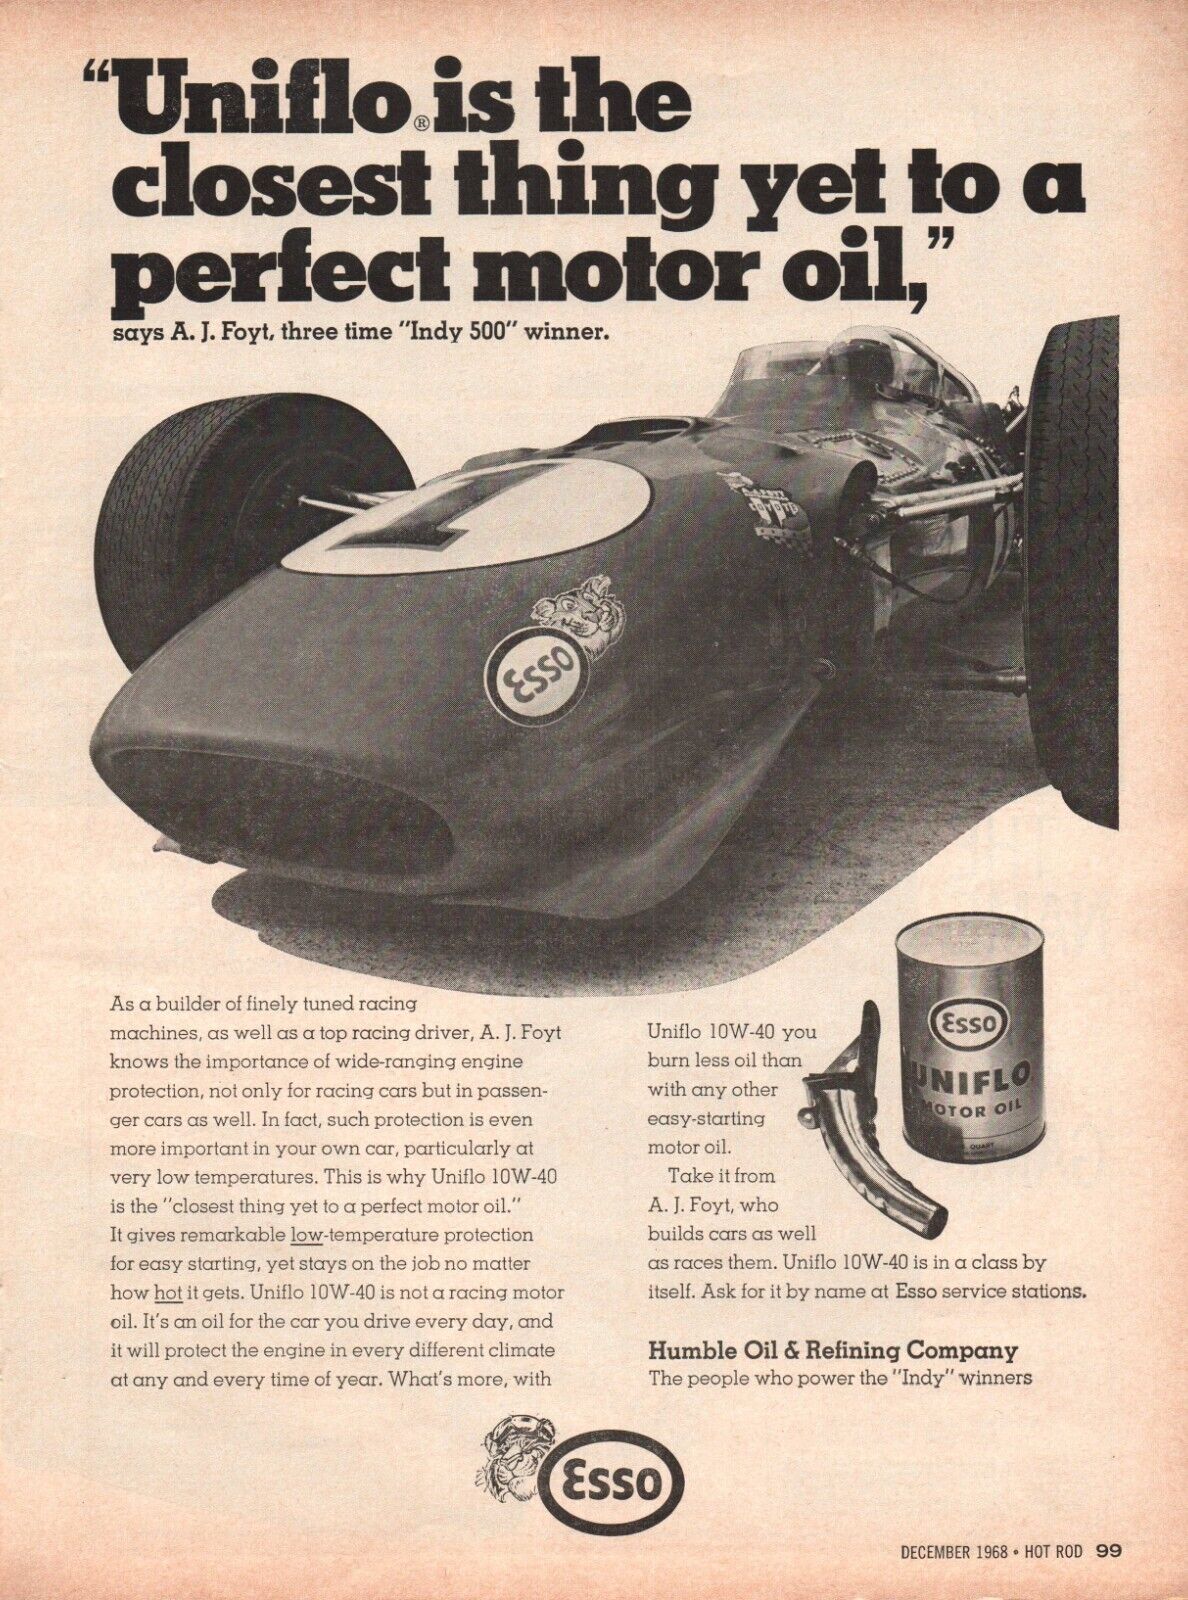 Esso Uniflo Motor Oil A.J. Foyt Indy 500 Vintage Print Ad 1968